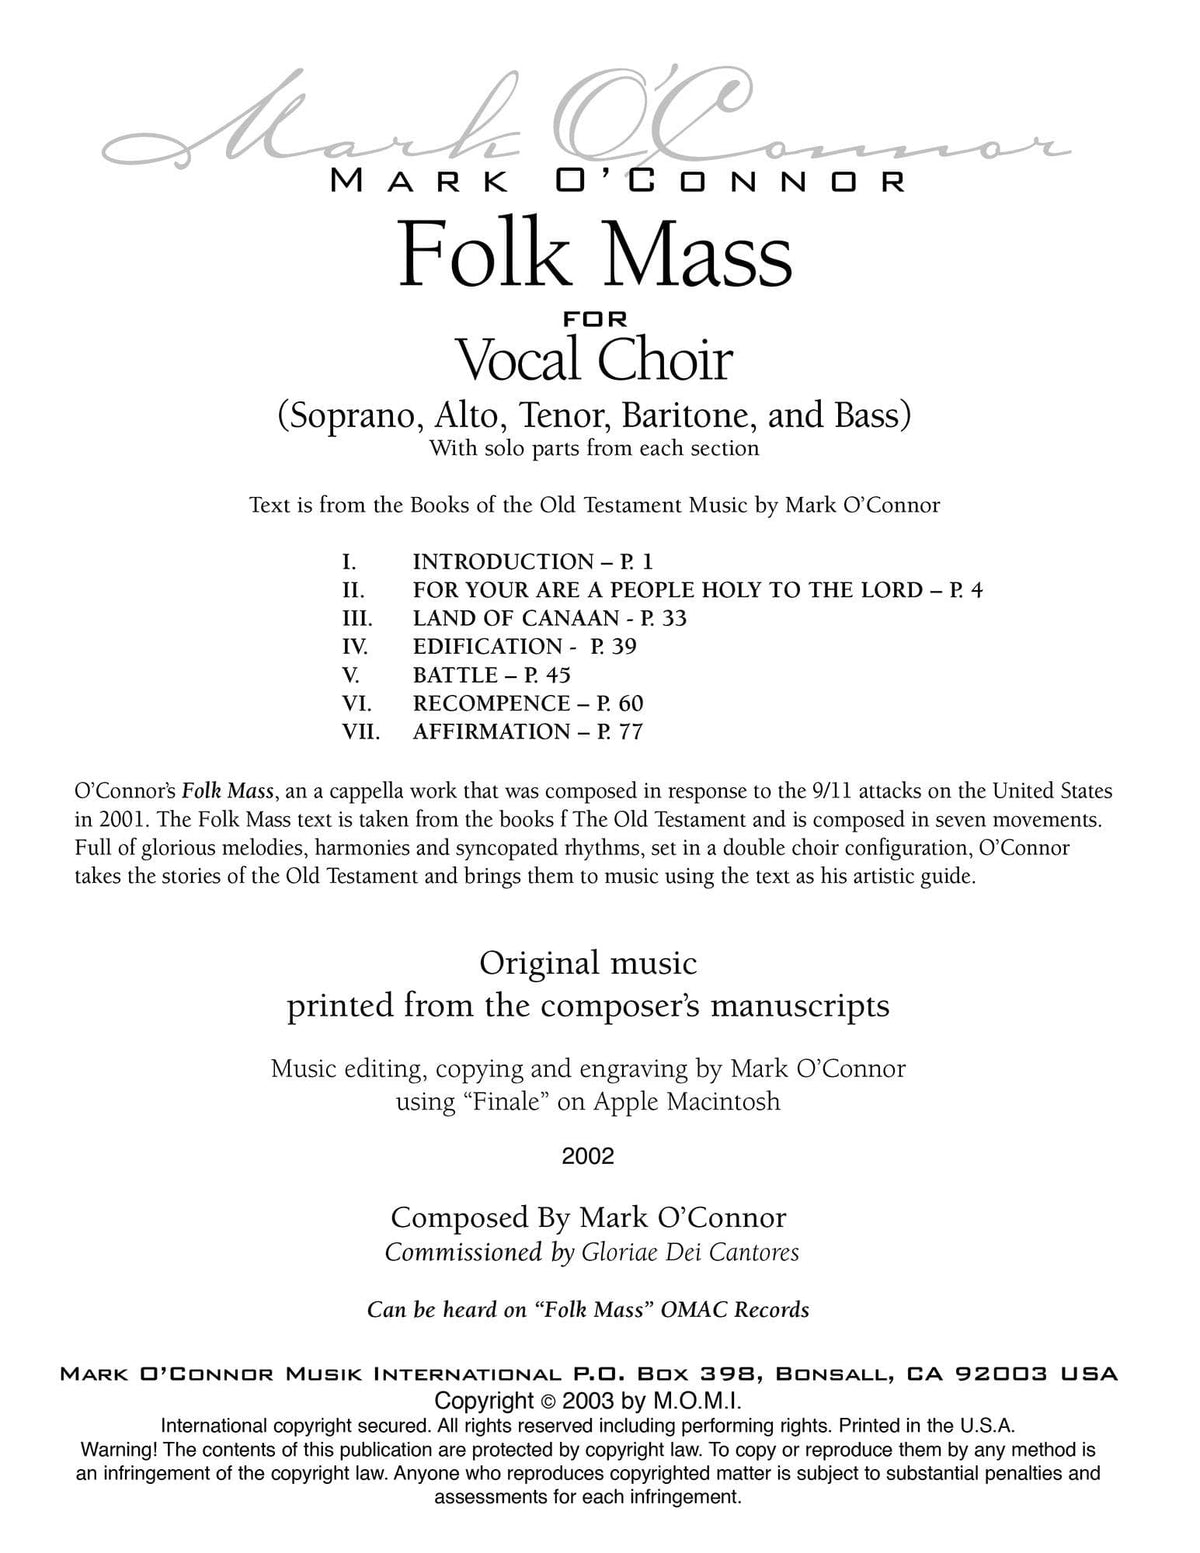 O'Connor, Mark - Folk Mass for Choir - Vocal Score - Digital Download